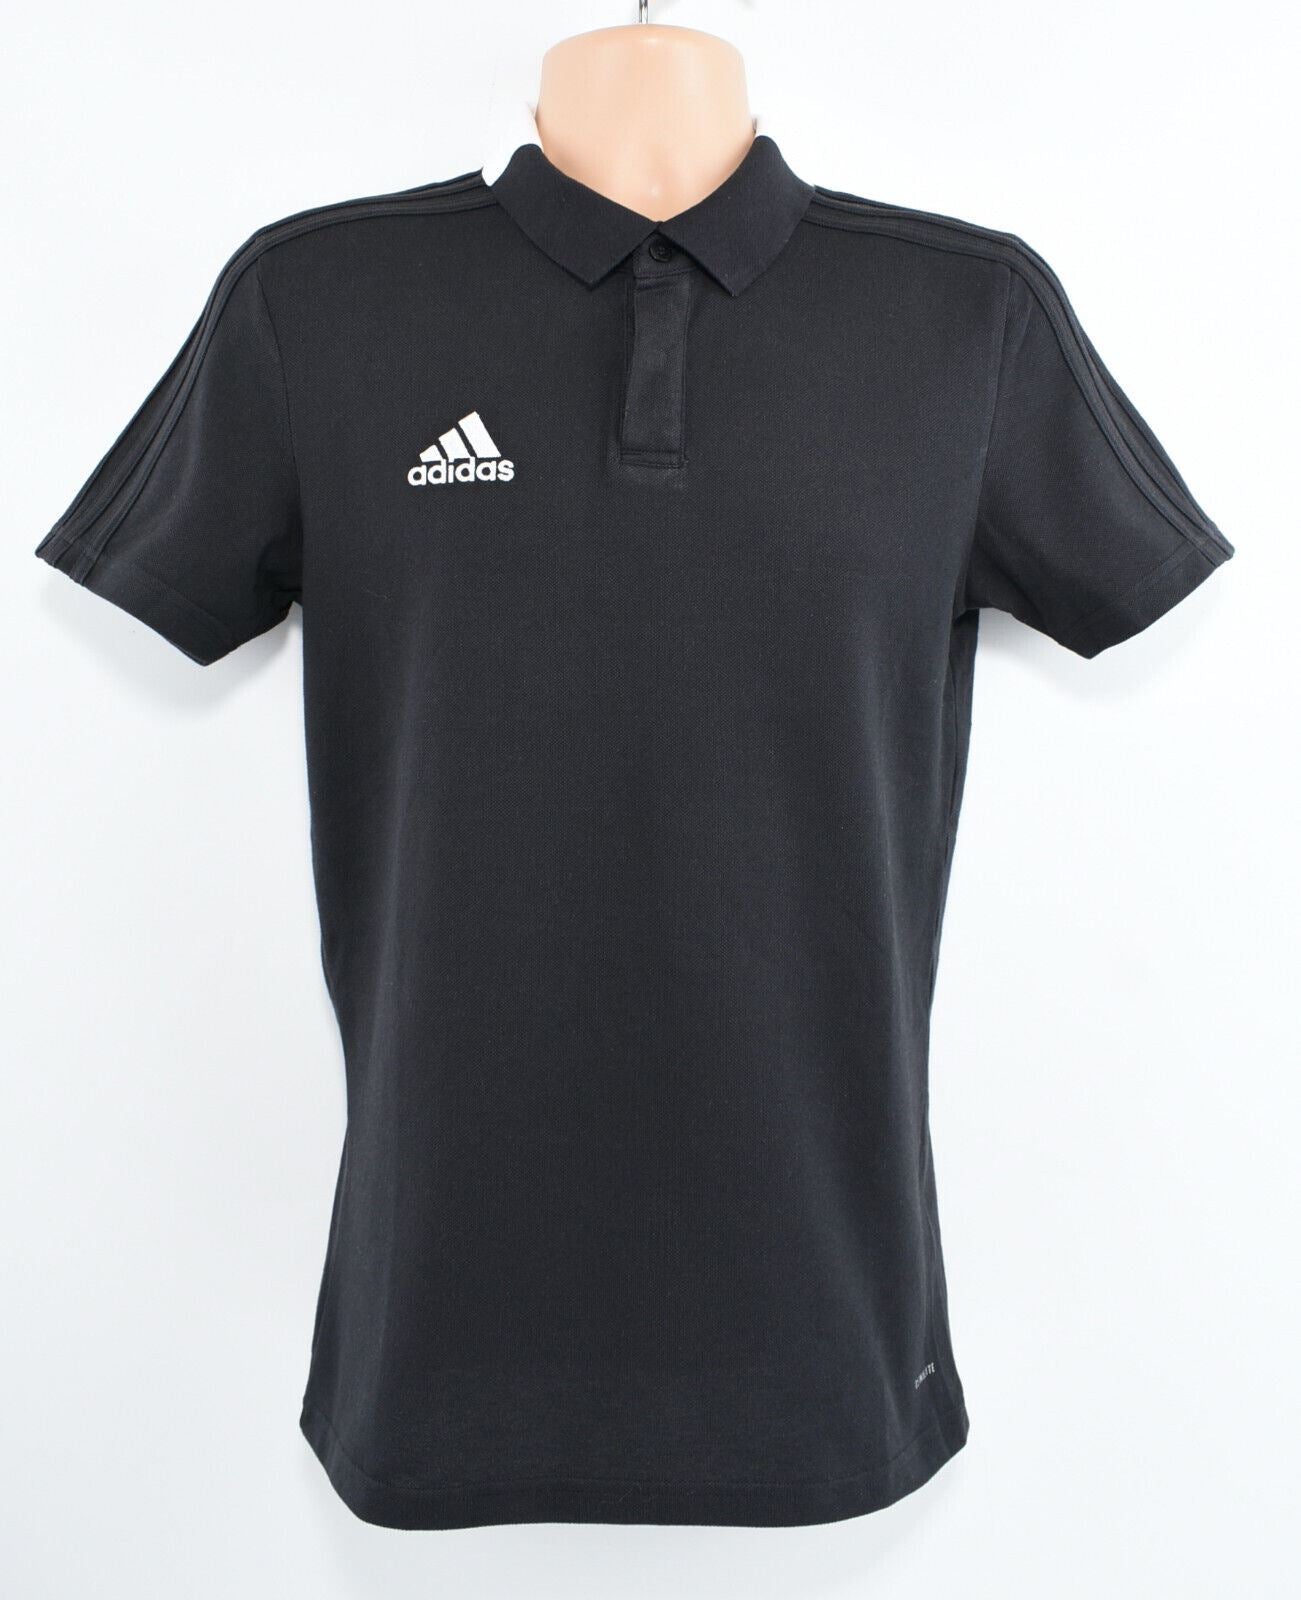 ADIDAS Condivo 18 Men's Performance Polo Shirt, Black, size SMALL